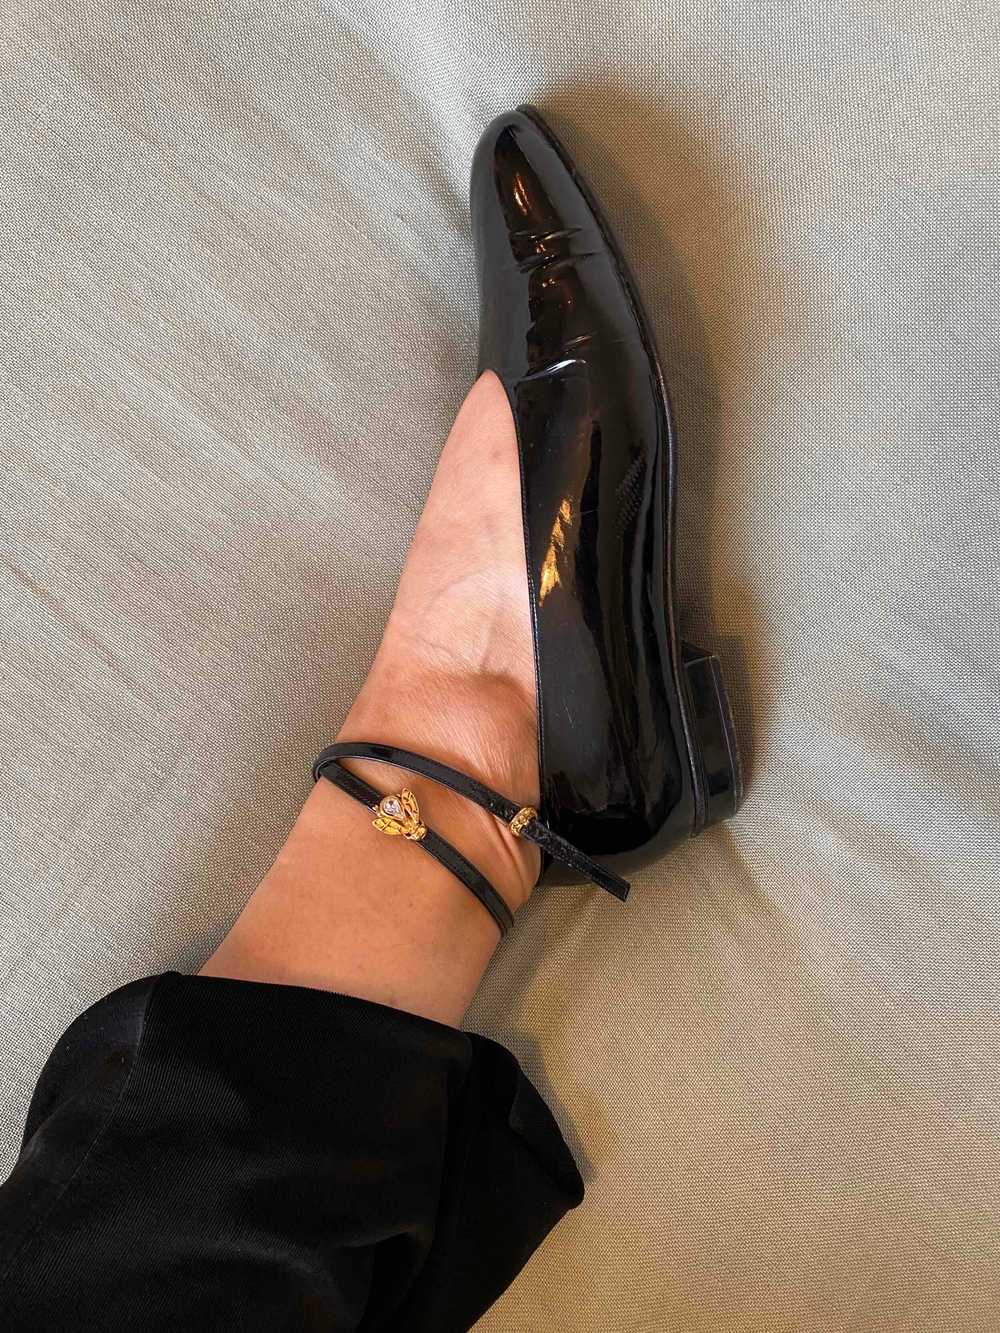 Christian Dior leather ballerinas - image 3